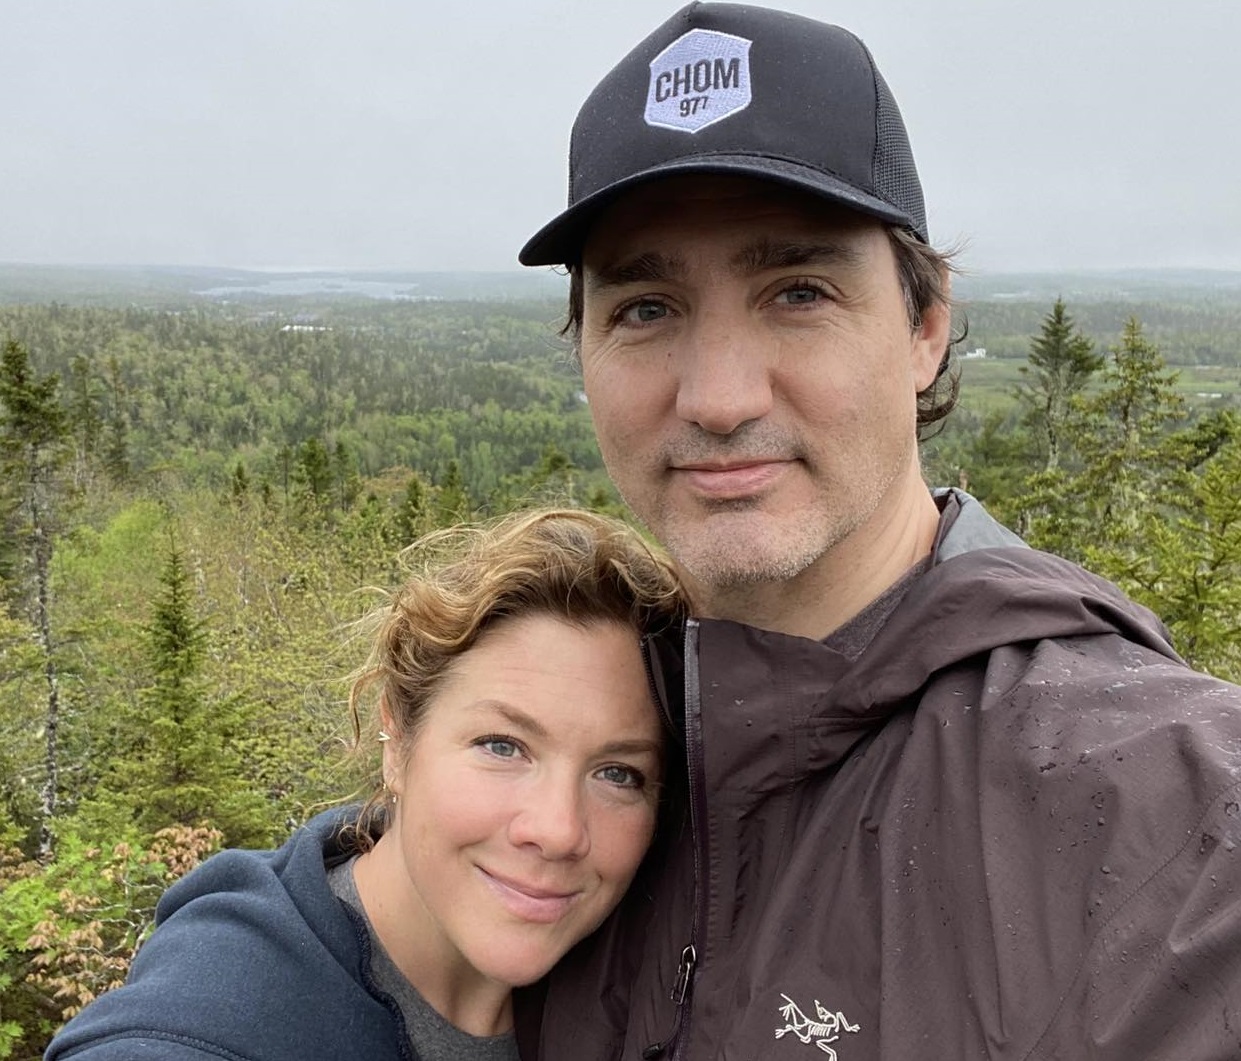 Prime Minister Justin Trudeau, his wife Sophie Gregoire Trudeau announce separation